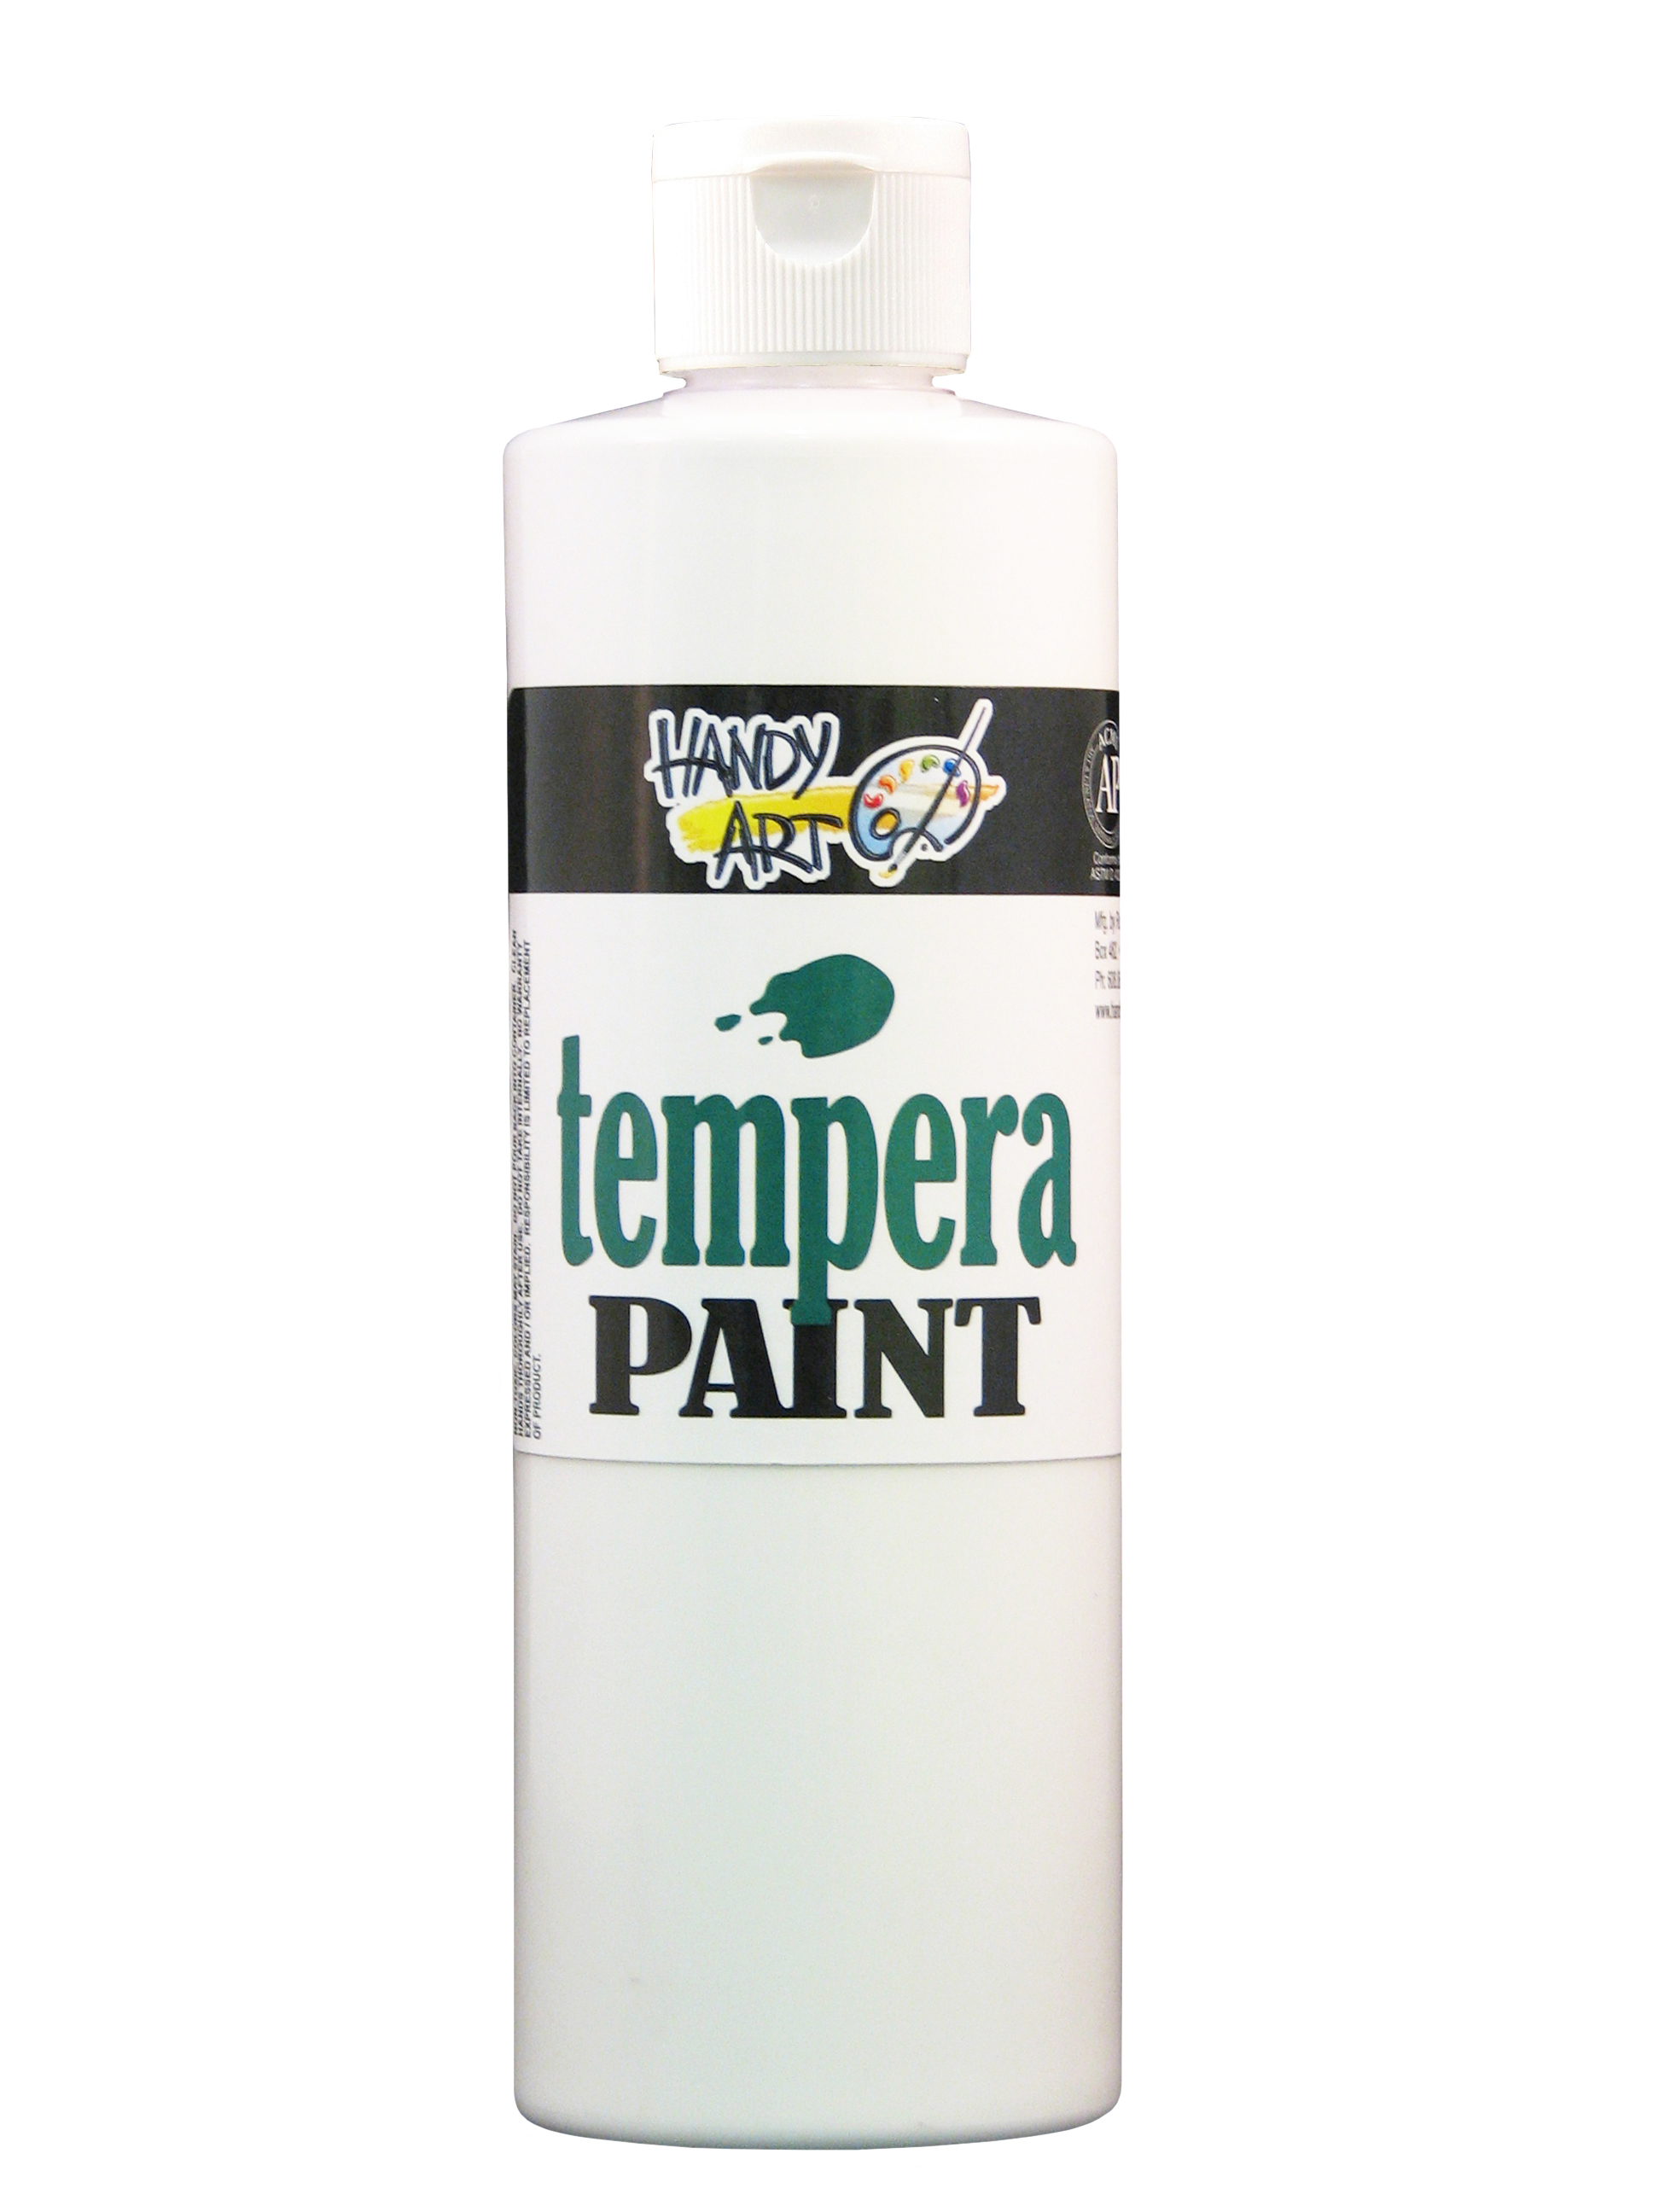 Handy Art 201005 Premium Tempera Paint White - 16oz